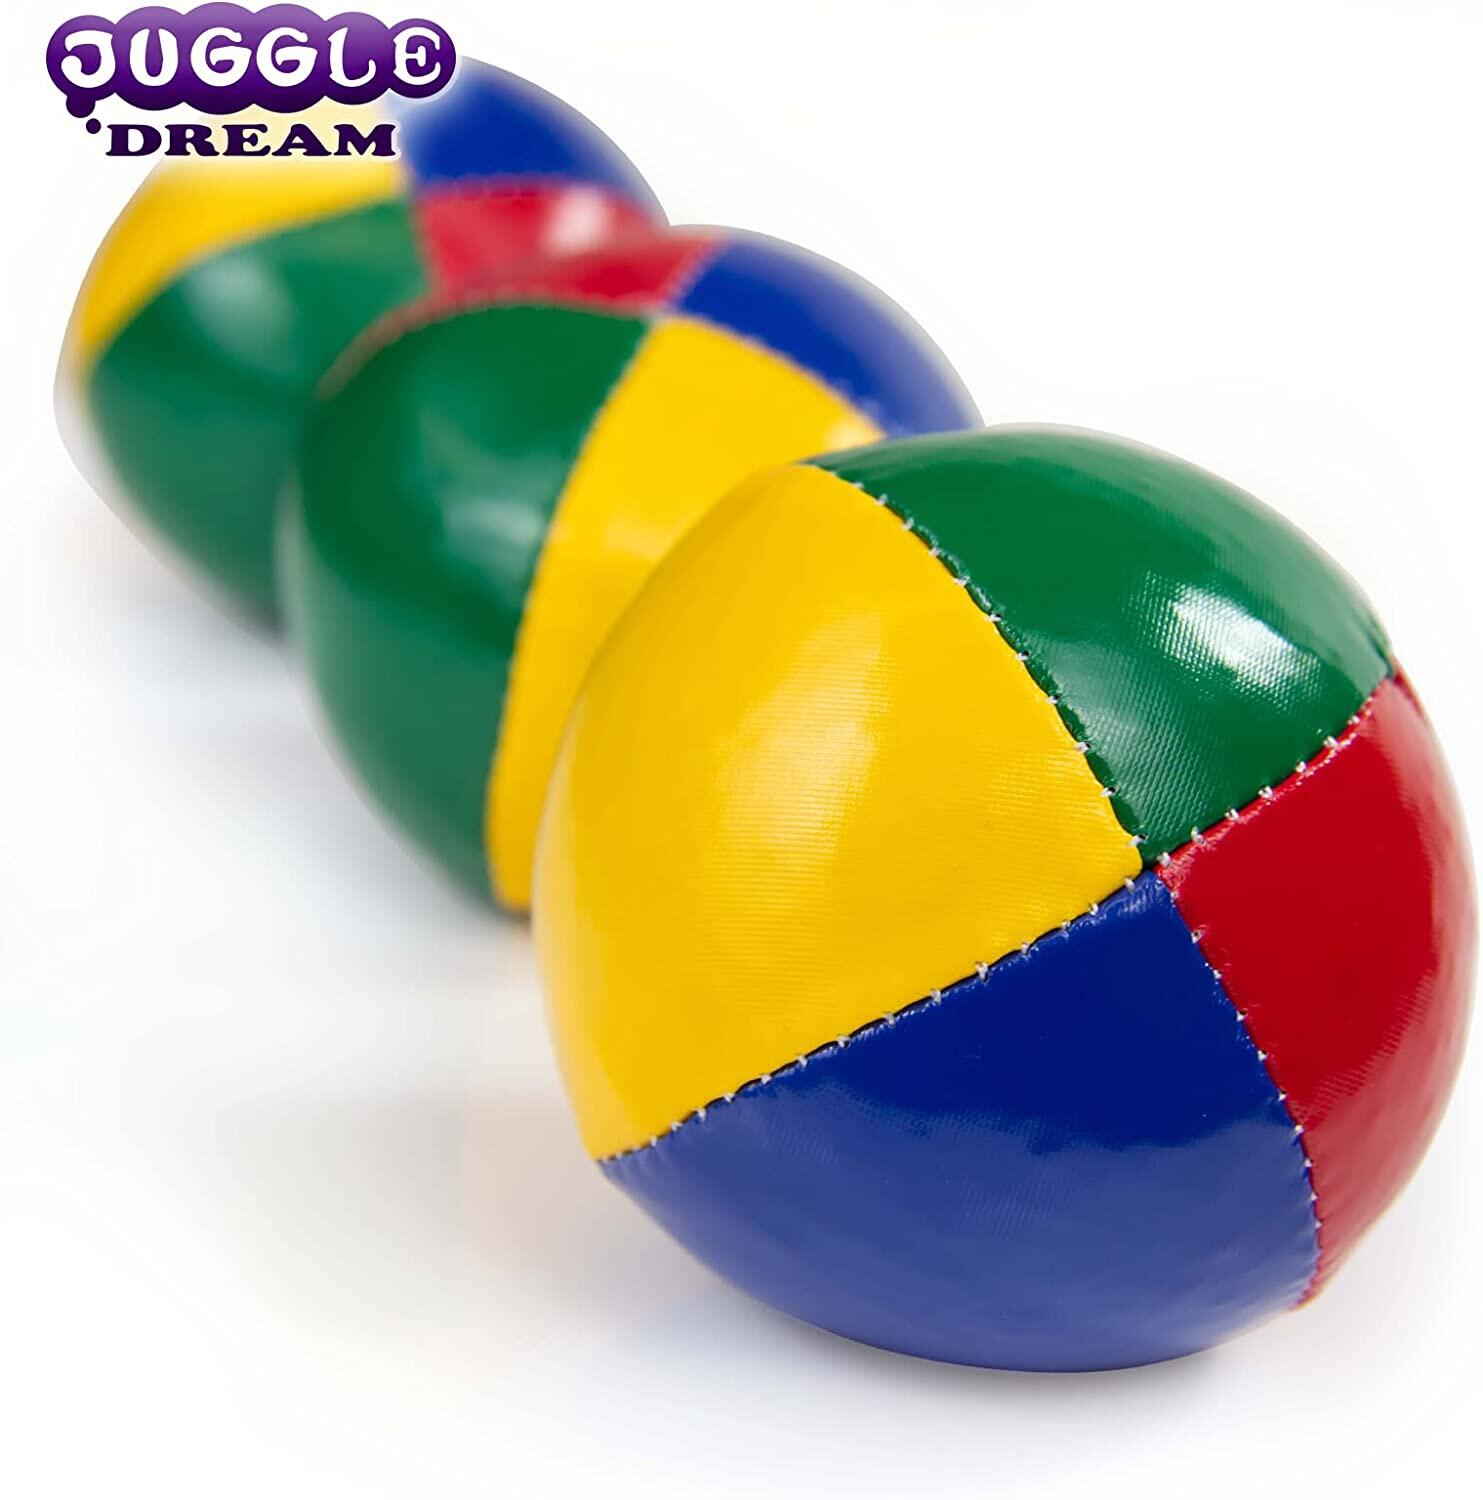 Juggle Dream 3x Pro Thud Juggling Balls - Set of 3 Professional Juggling Balls w 4/5